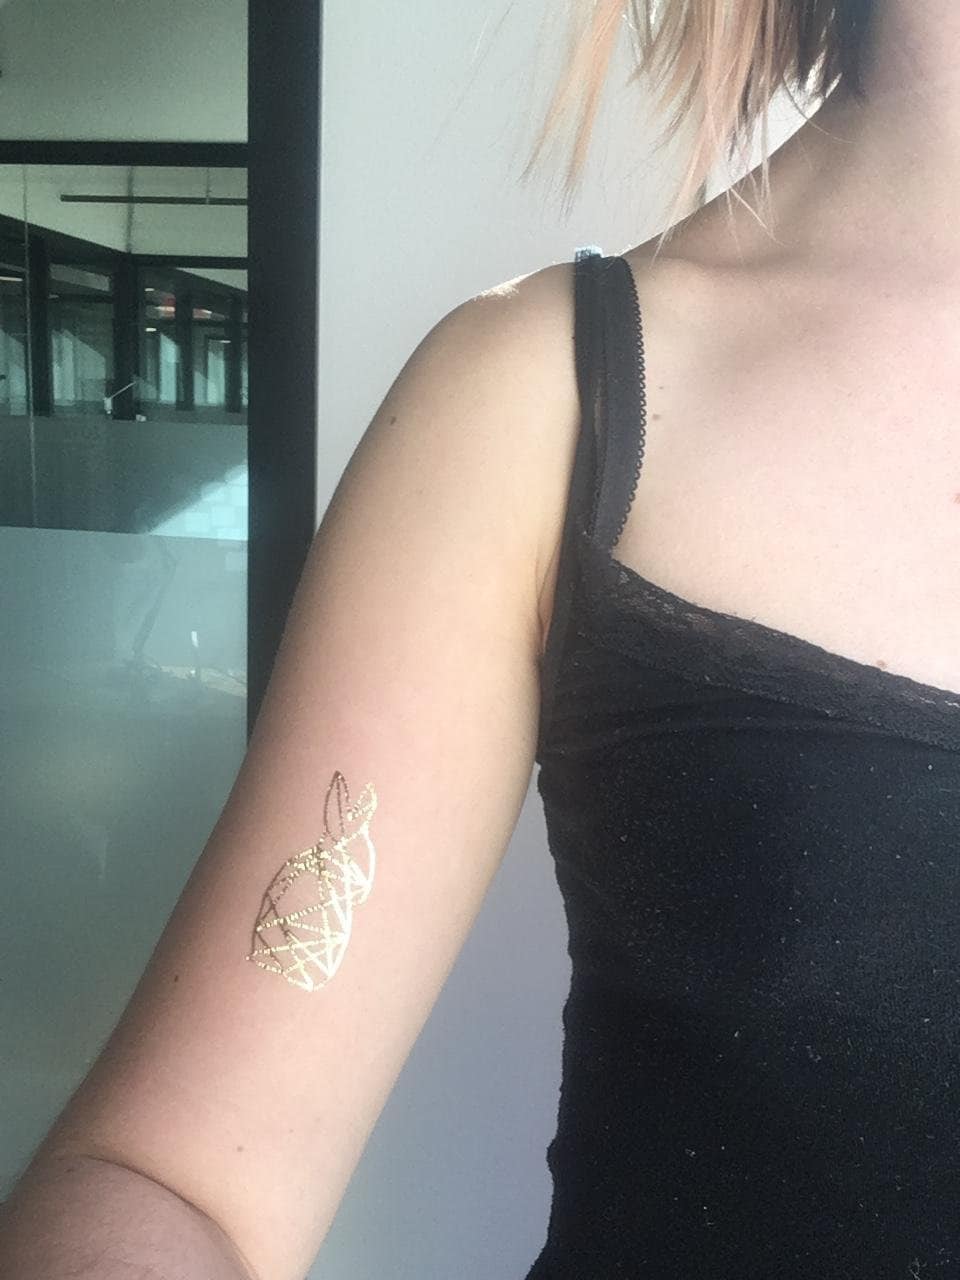 Gold Rabbit Tattoo | Sparkly metallic geometric  bunny temporary tattoo design, set of 3 tattoos